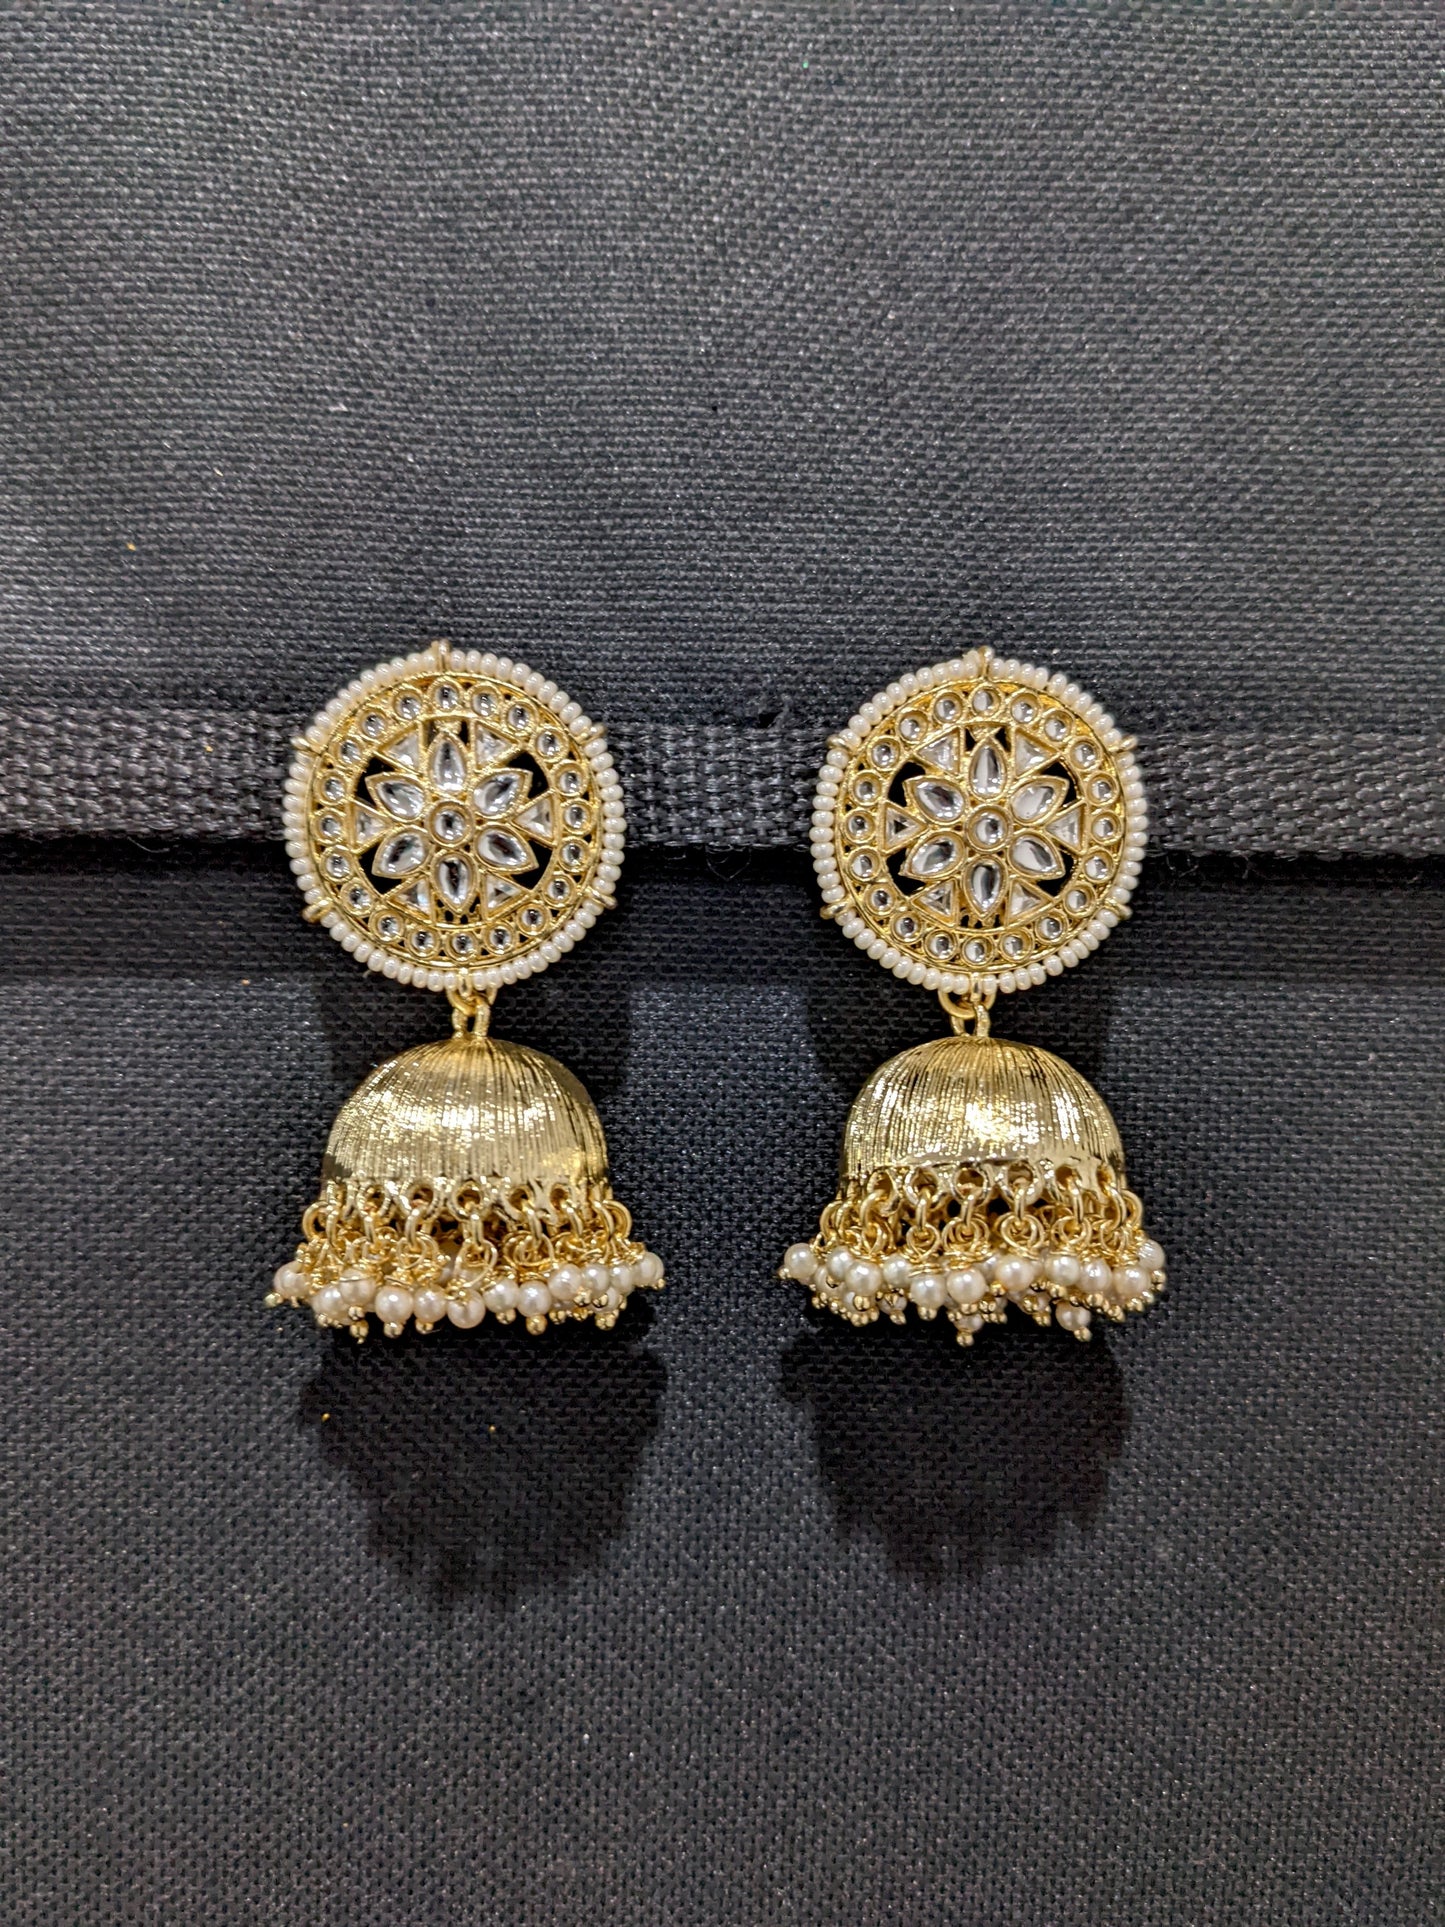 Large Jhumka / Indian Earrings / Kundan Earrings